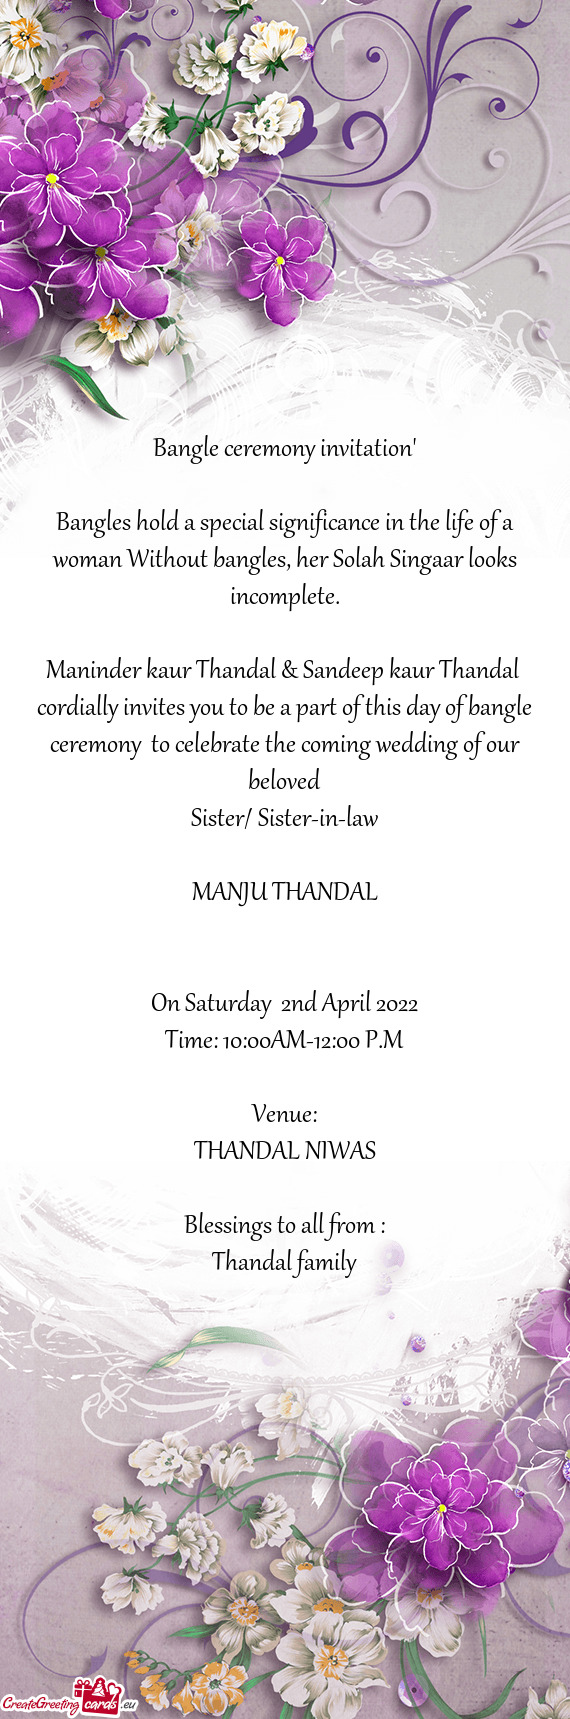 Maninder kaur Thandal & Sandeep kaur Thandal